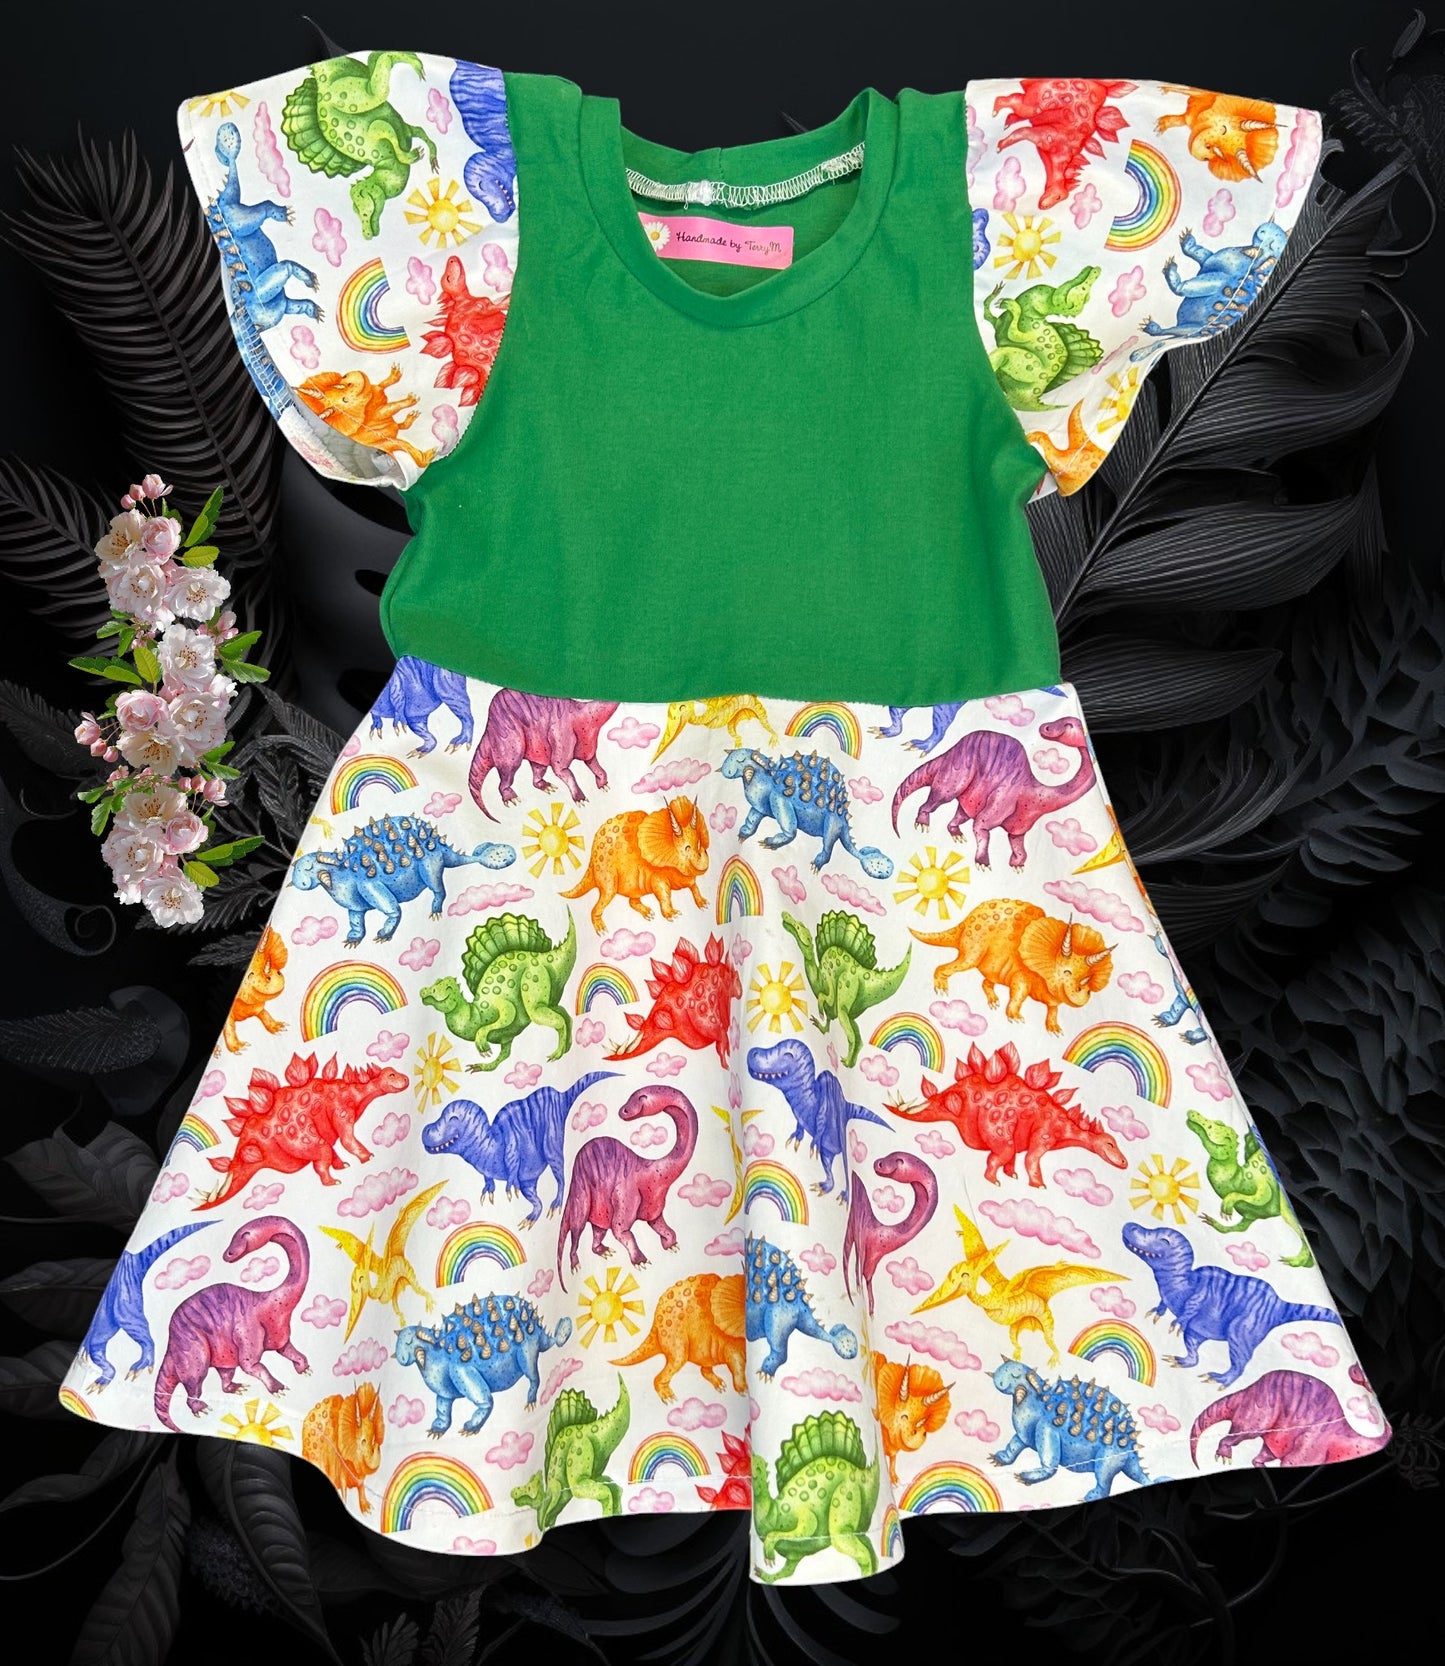 Colourful Dinosaur Dress - Size 3